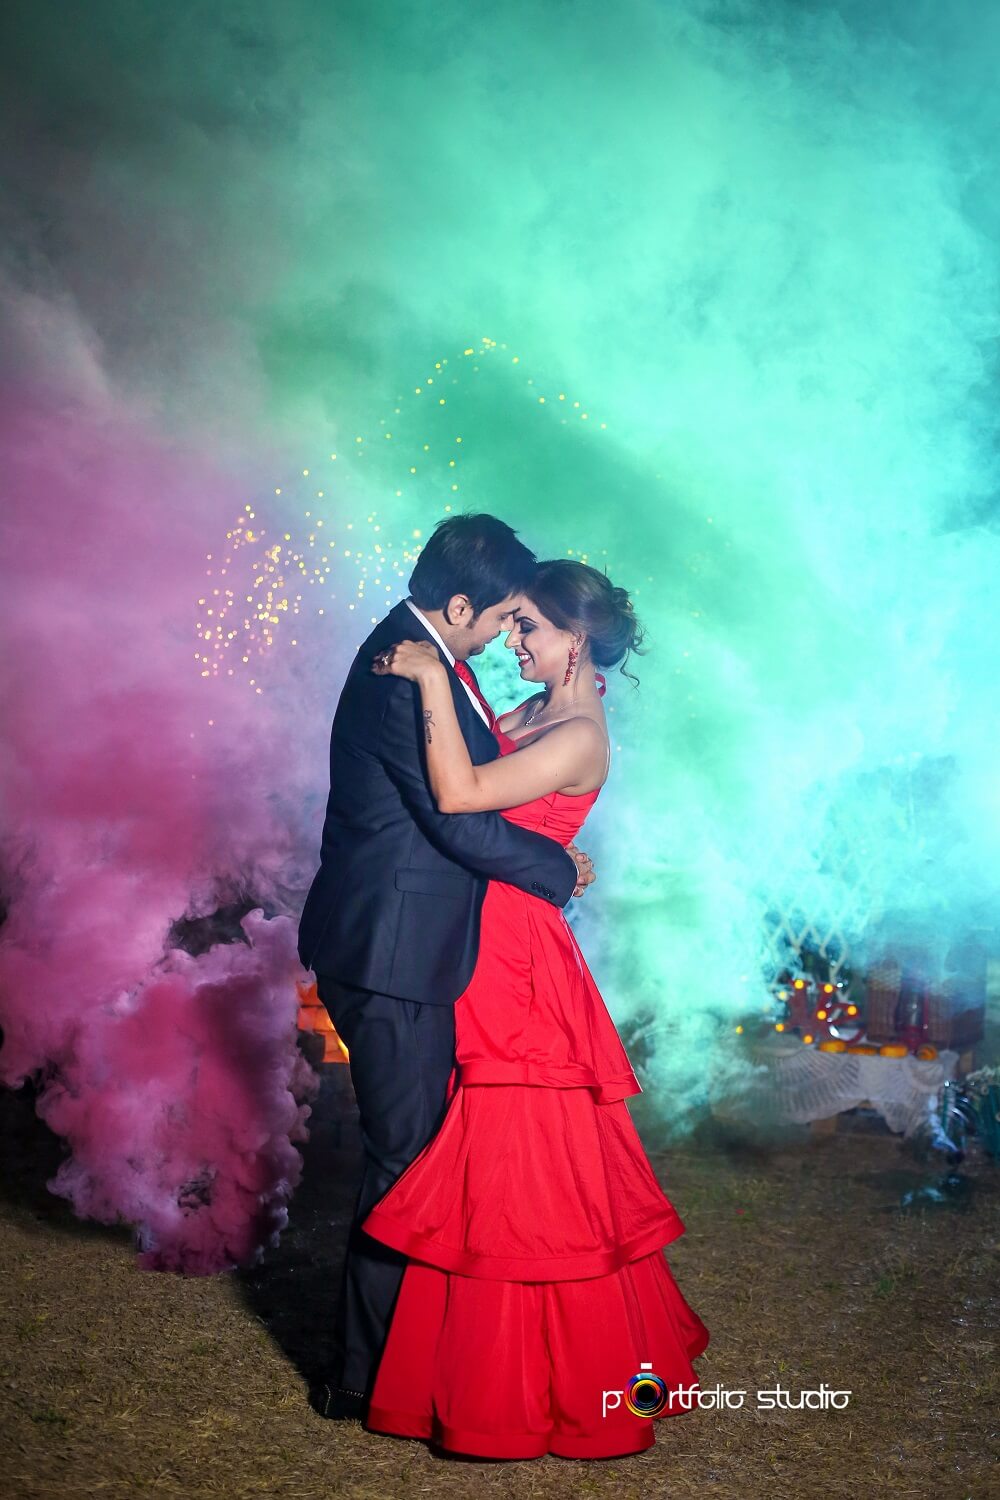 Anand Madas | Pre wedding stories Virender+ pooja #coupleshoot #couplegoals  #love #couple #weddingphotography #wedding #couples #photography #couple...  | Instagram